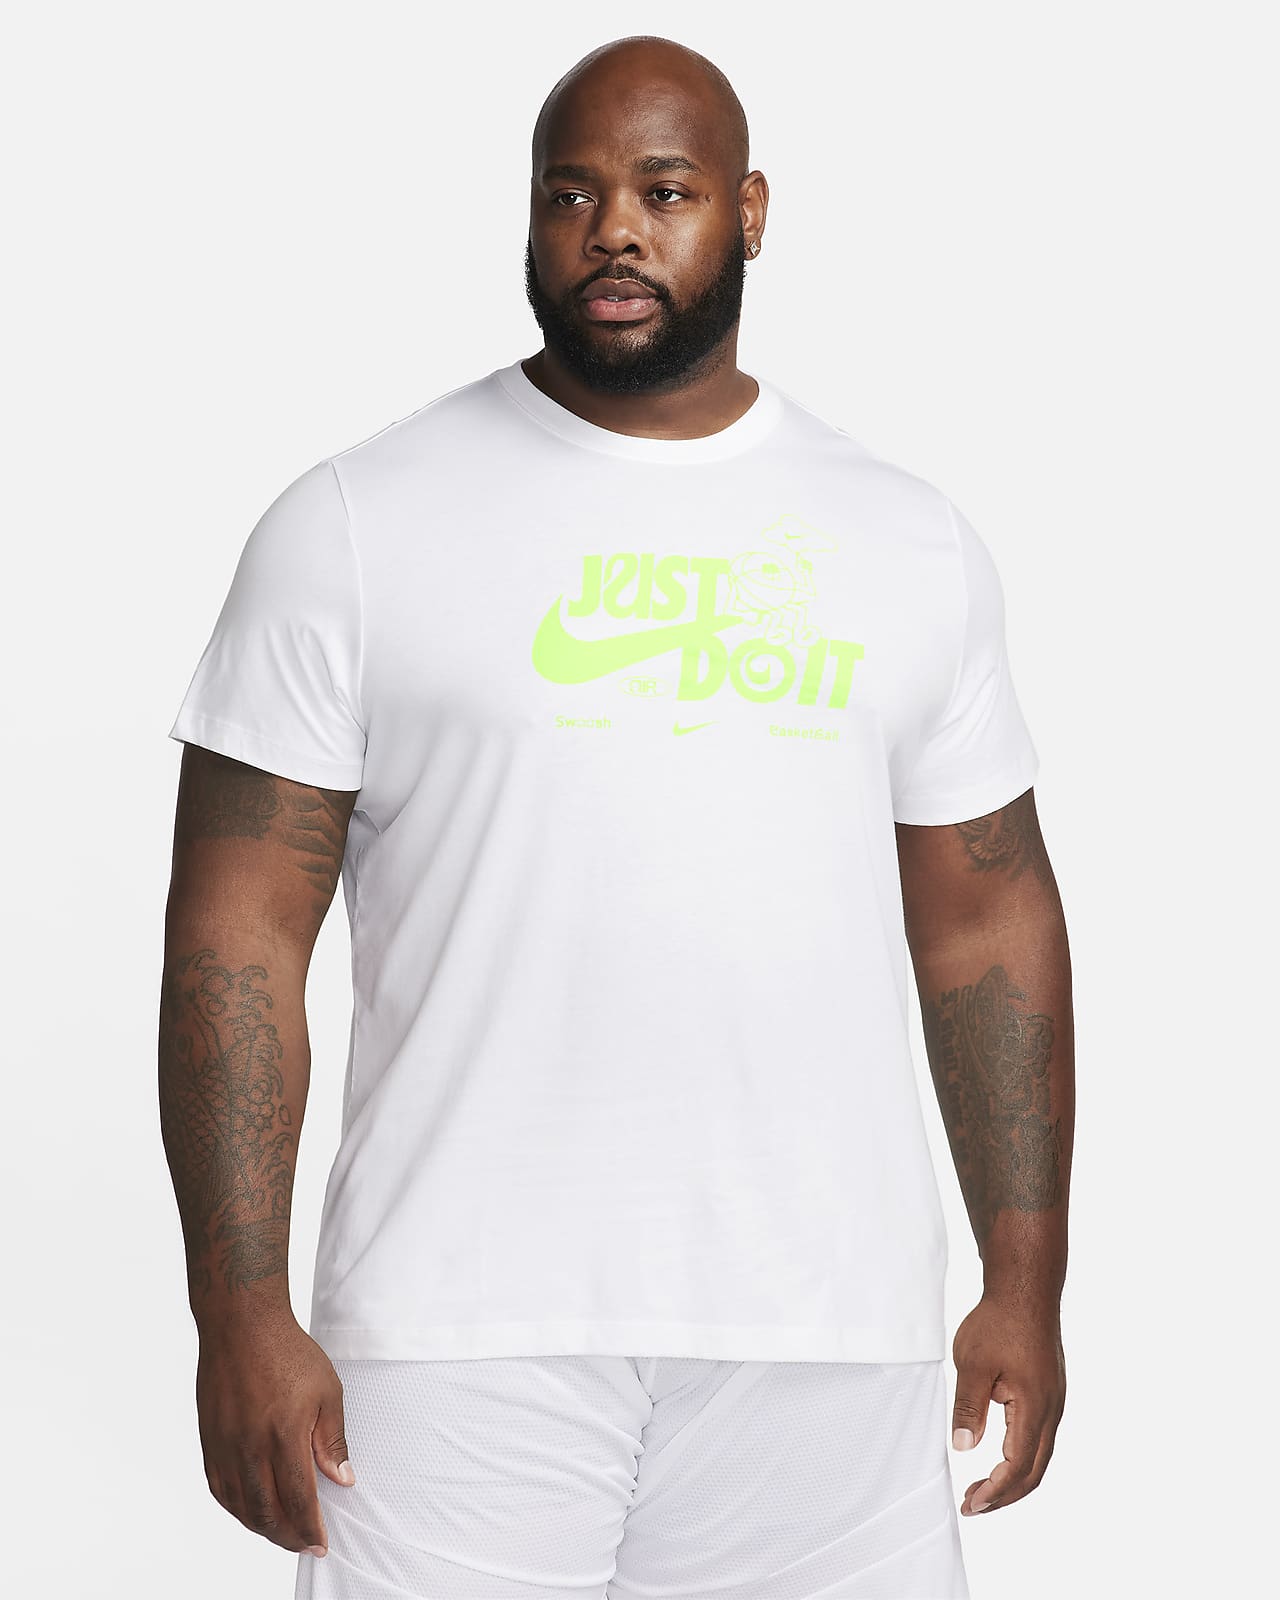 T-shirts Nike Homme Swoosh League Tee Black